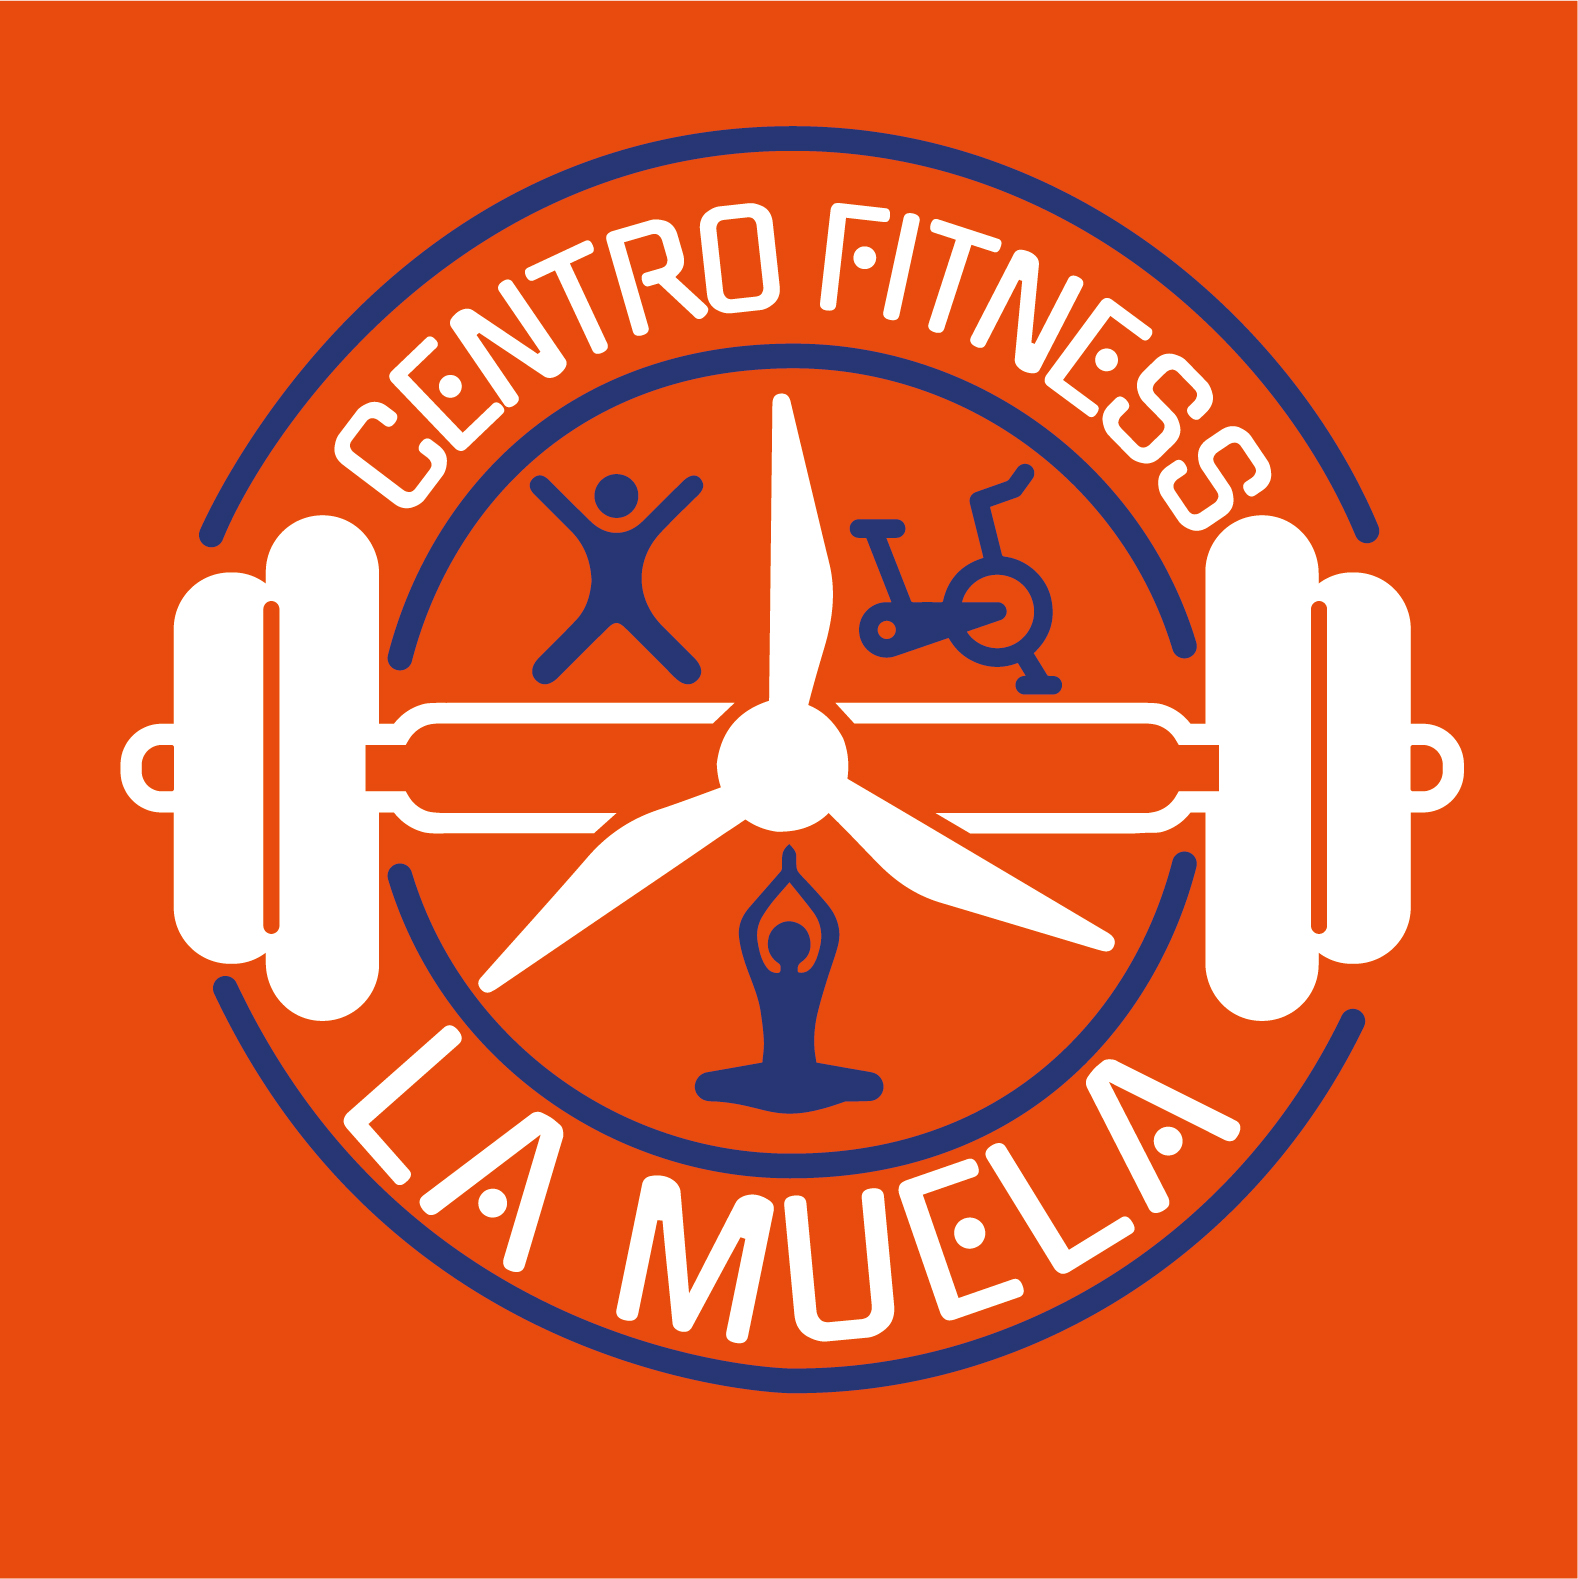 Centro Fitness La Muela - Imagina Arte Gráfico